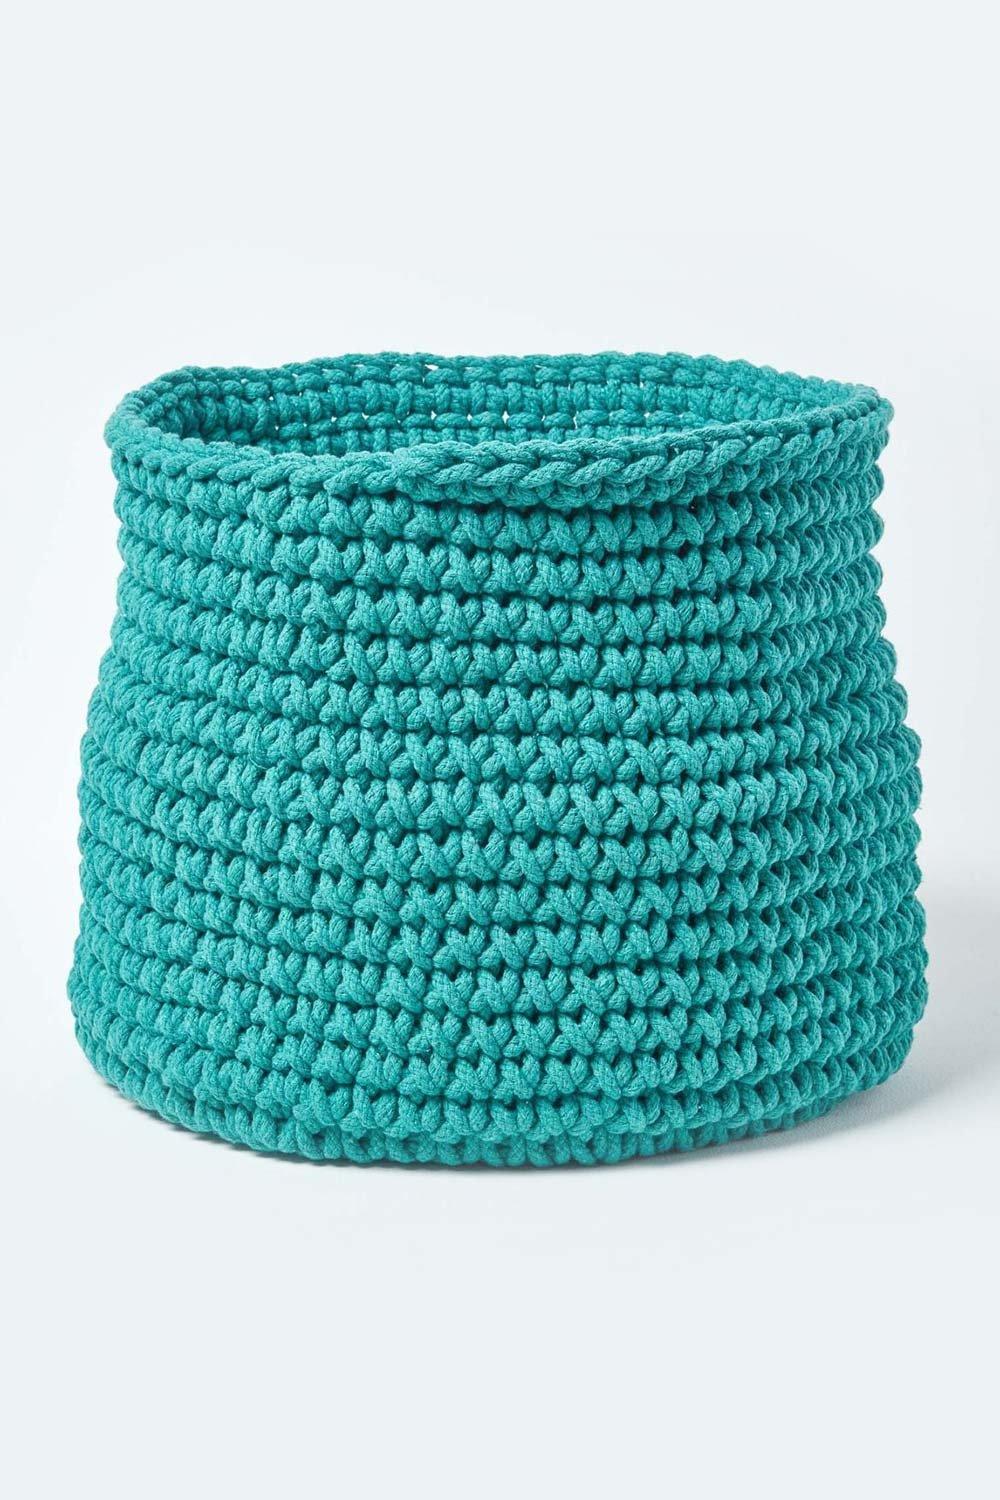 Homescapes Cotton Knitted Round Storage Basket, 42 x 37 cm|green